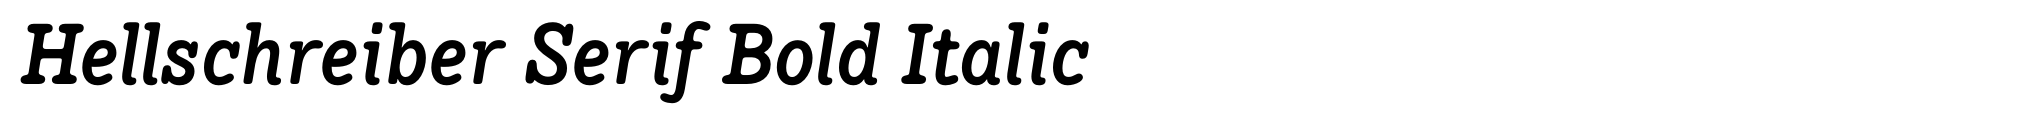 Hellschreiber Serif Bold Italic image